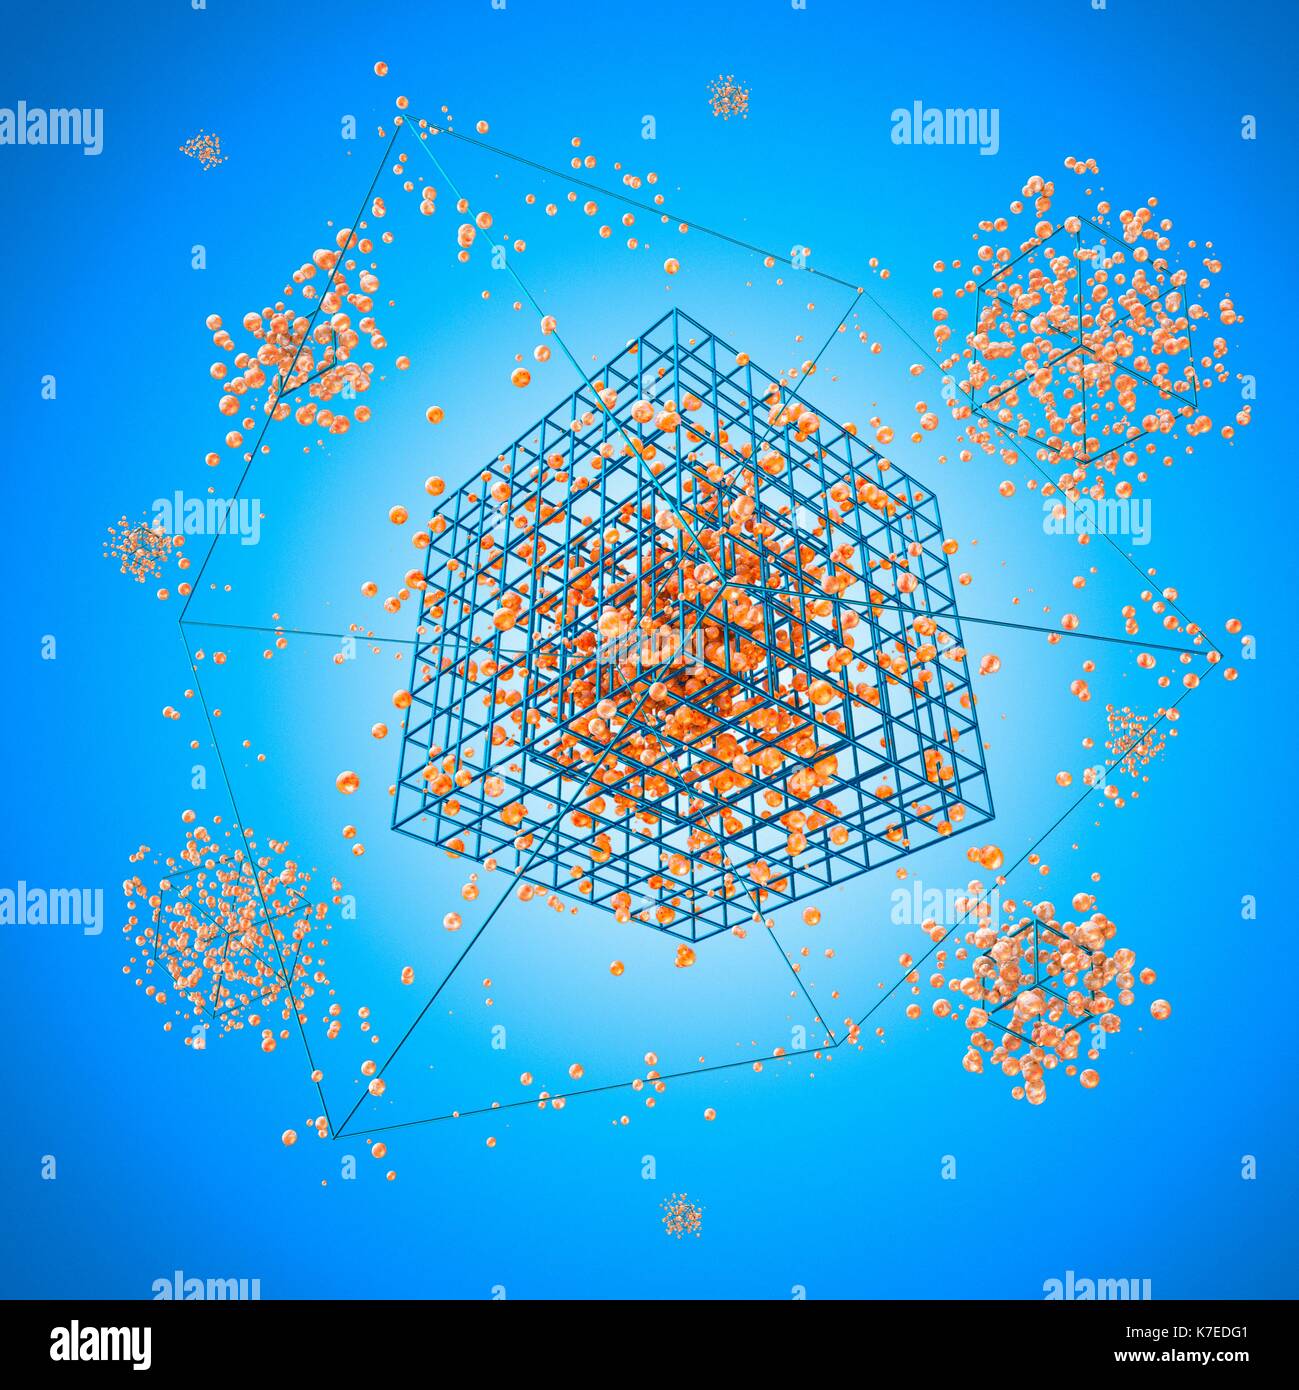 Atoms against blue background, illustration. Stock Photo